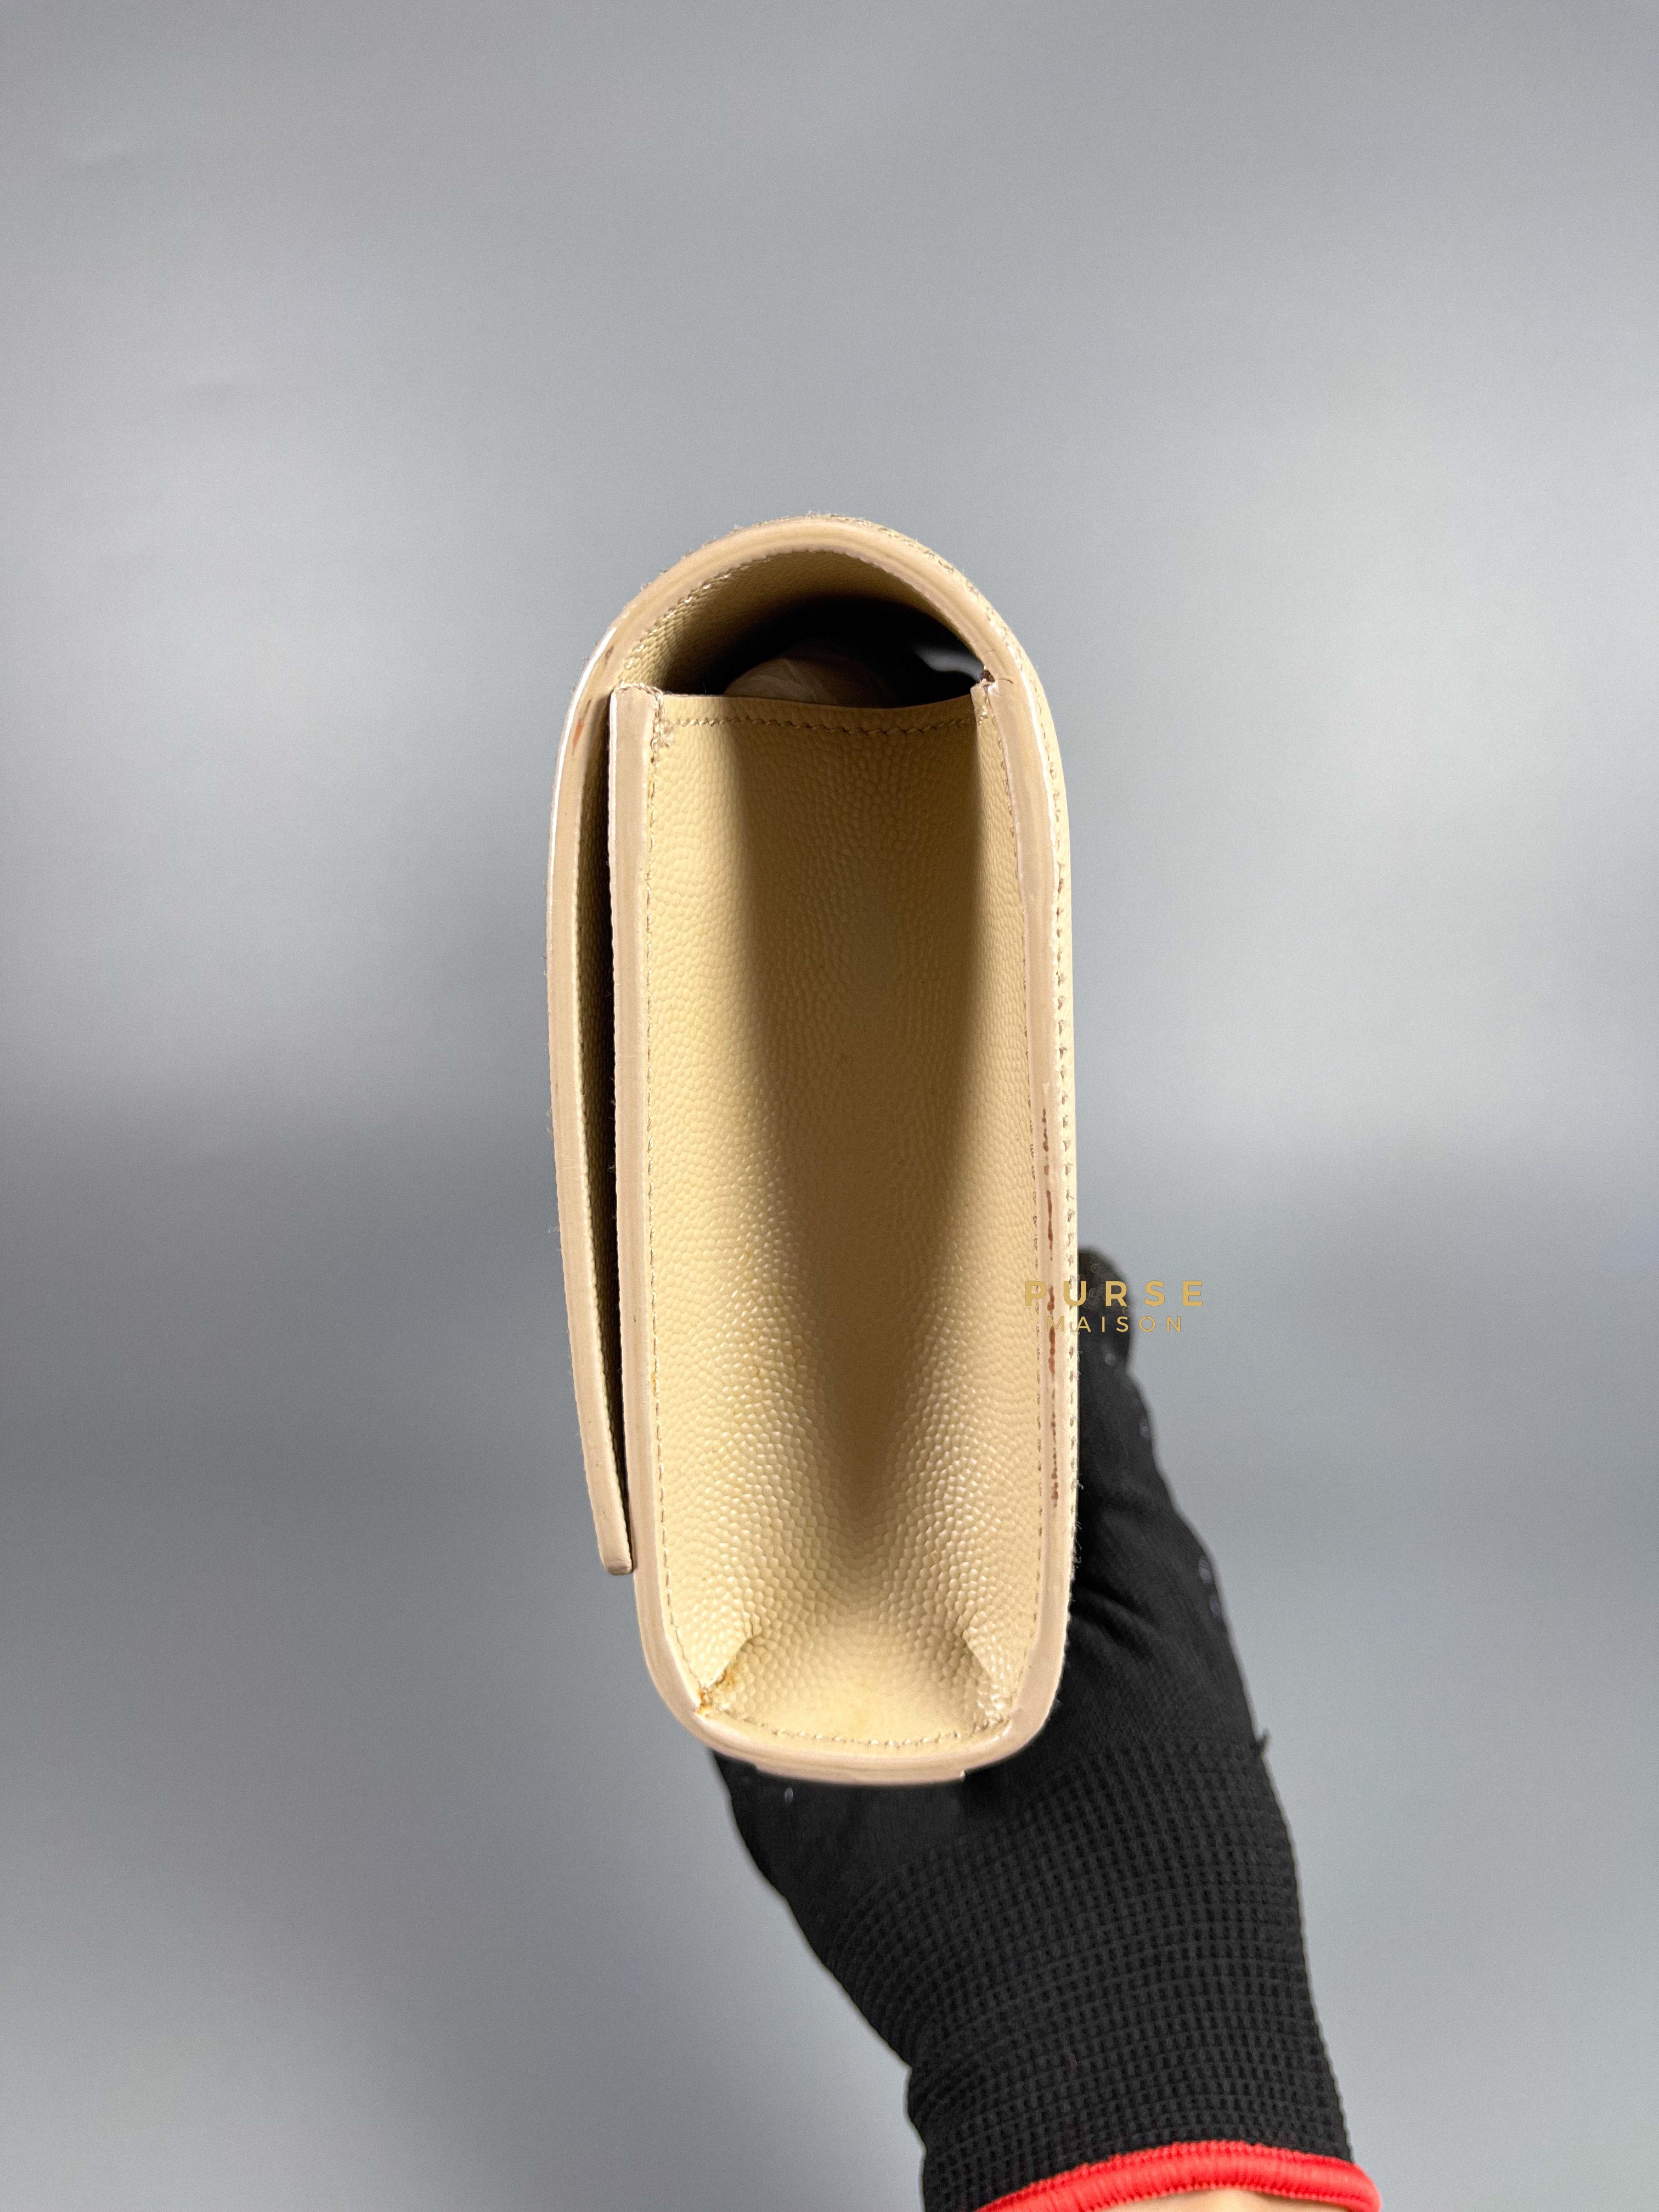 YSL Clutch Beige in Gold Hardware | Purse Maison Luxury Bags Shop